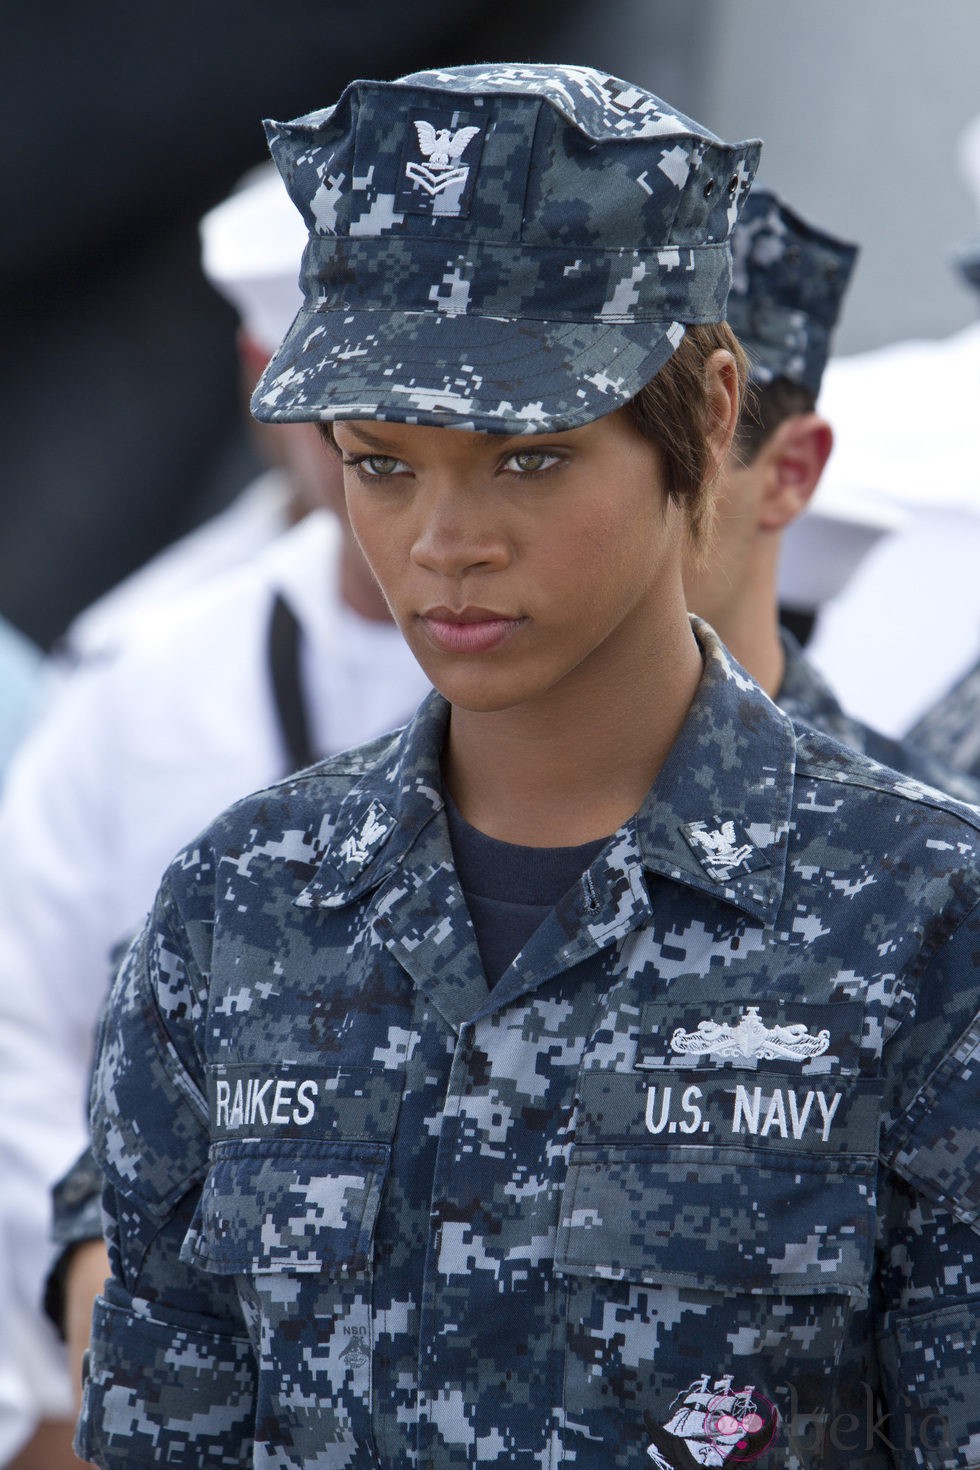 Rihanna en la película 'Battleship'